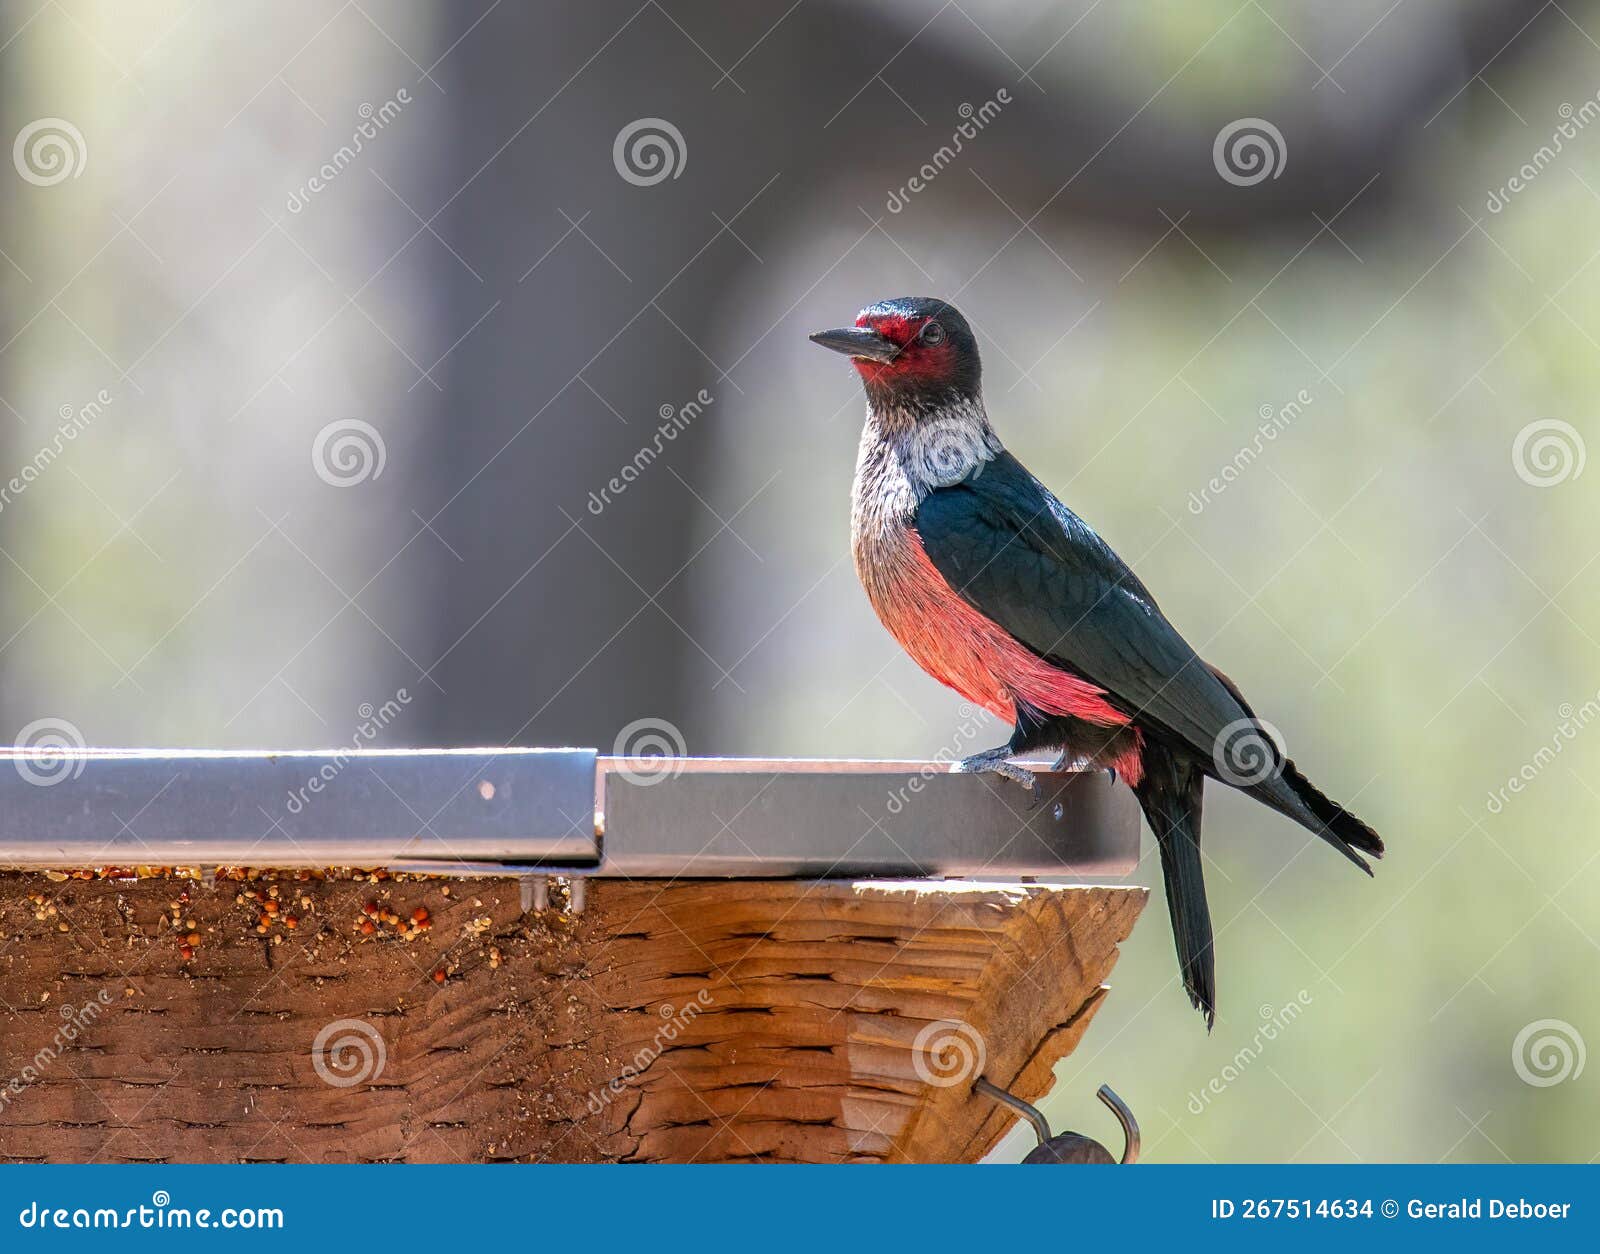 lewis`s woodpecker at a colorado feeding station